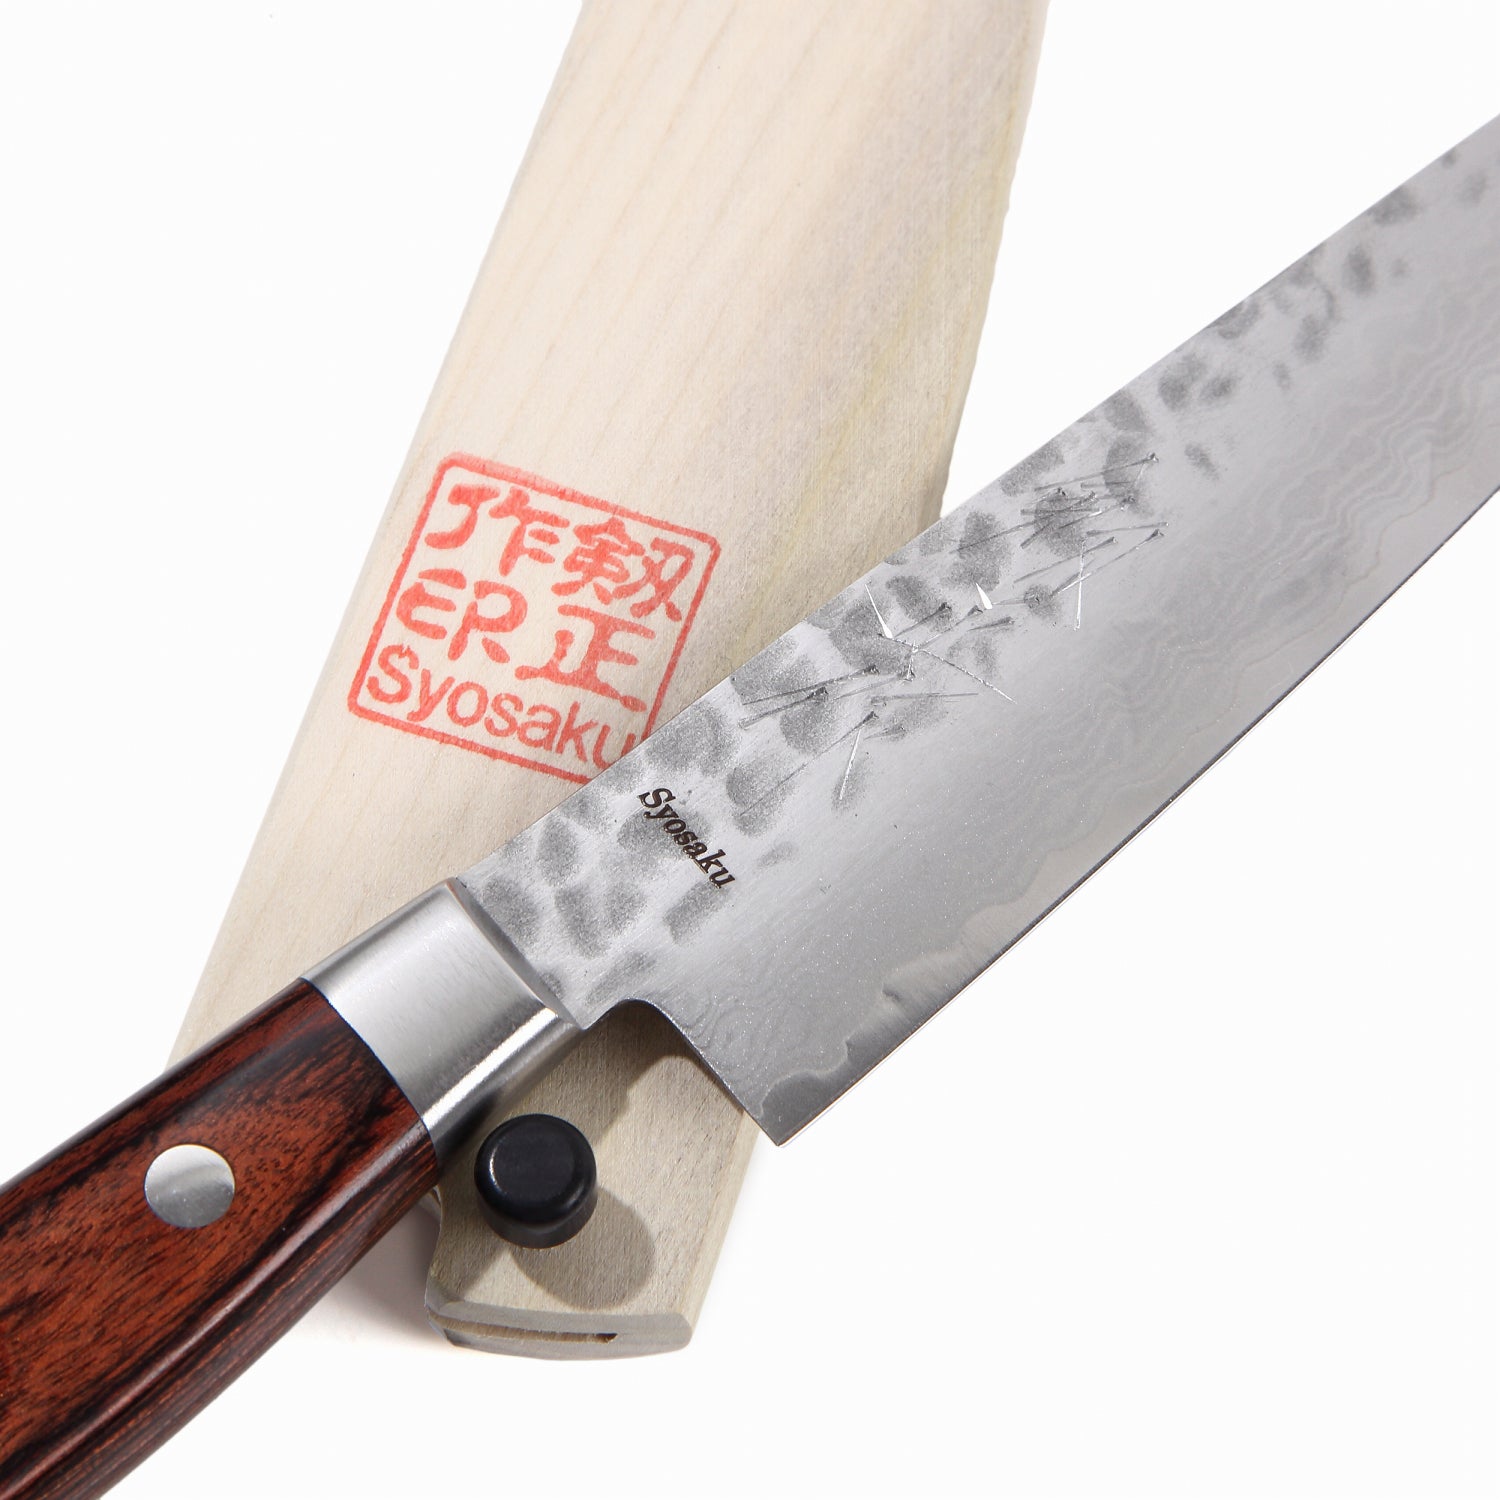 Syosaku Japanese Petty Knife Hammered Damascus VG-10 16 Layer Mahogany Handle, 5.3-inch (135mm) with Magnolia Wood Sheath Saya Cover